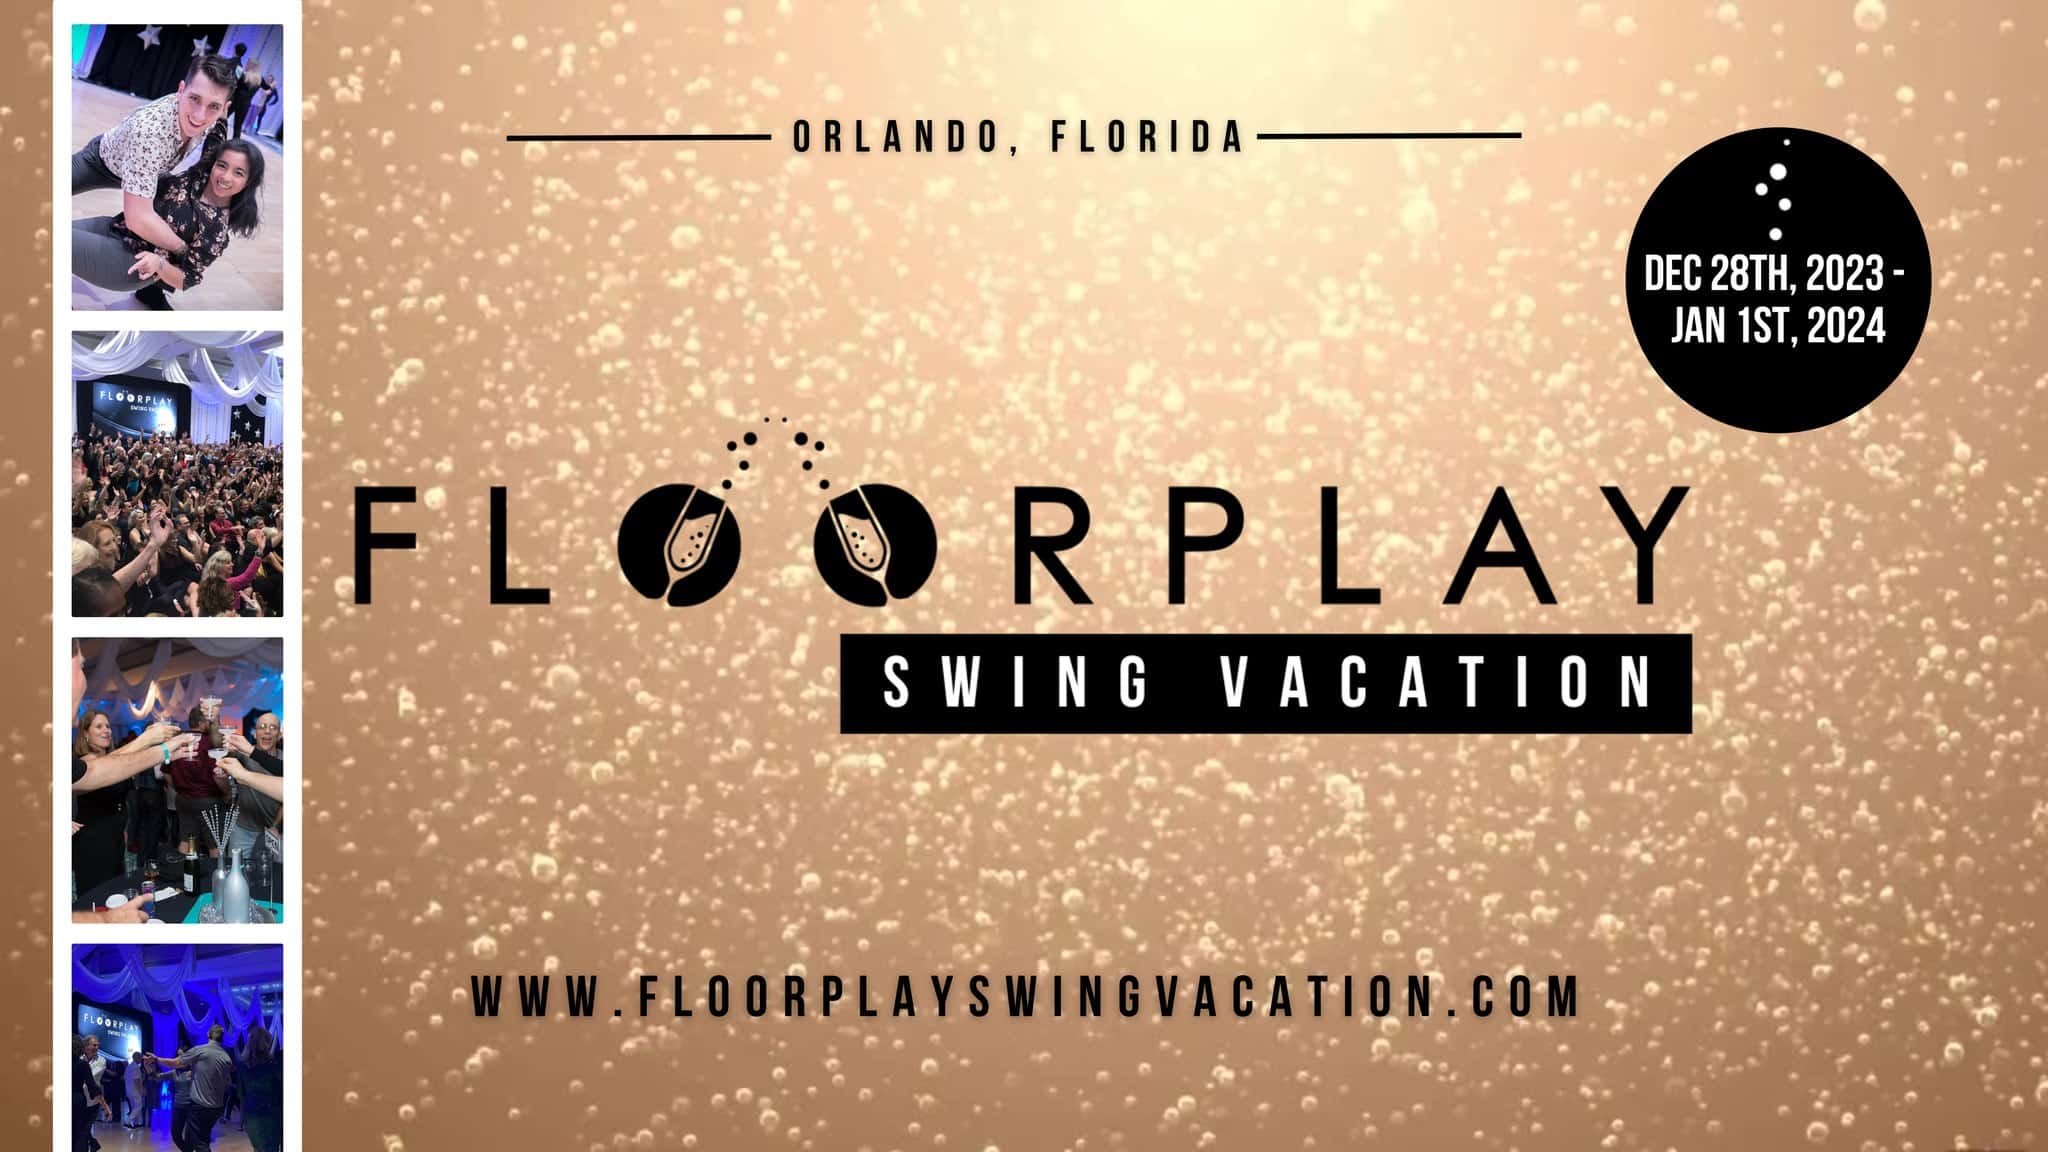 Floorplay Swing Vacation 2023-2024